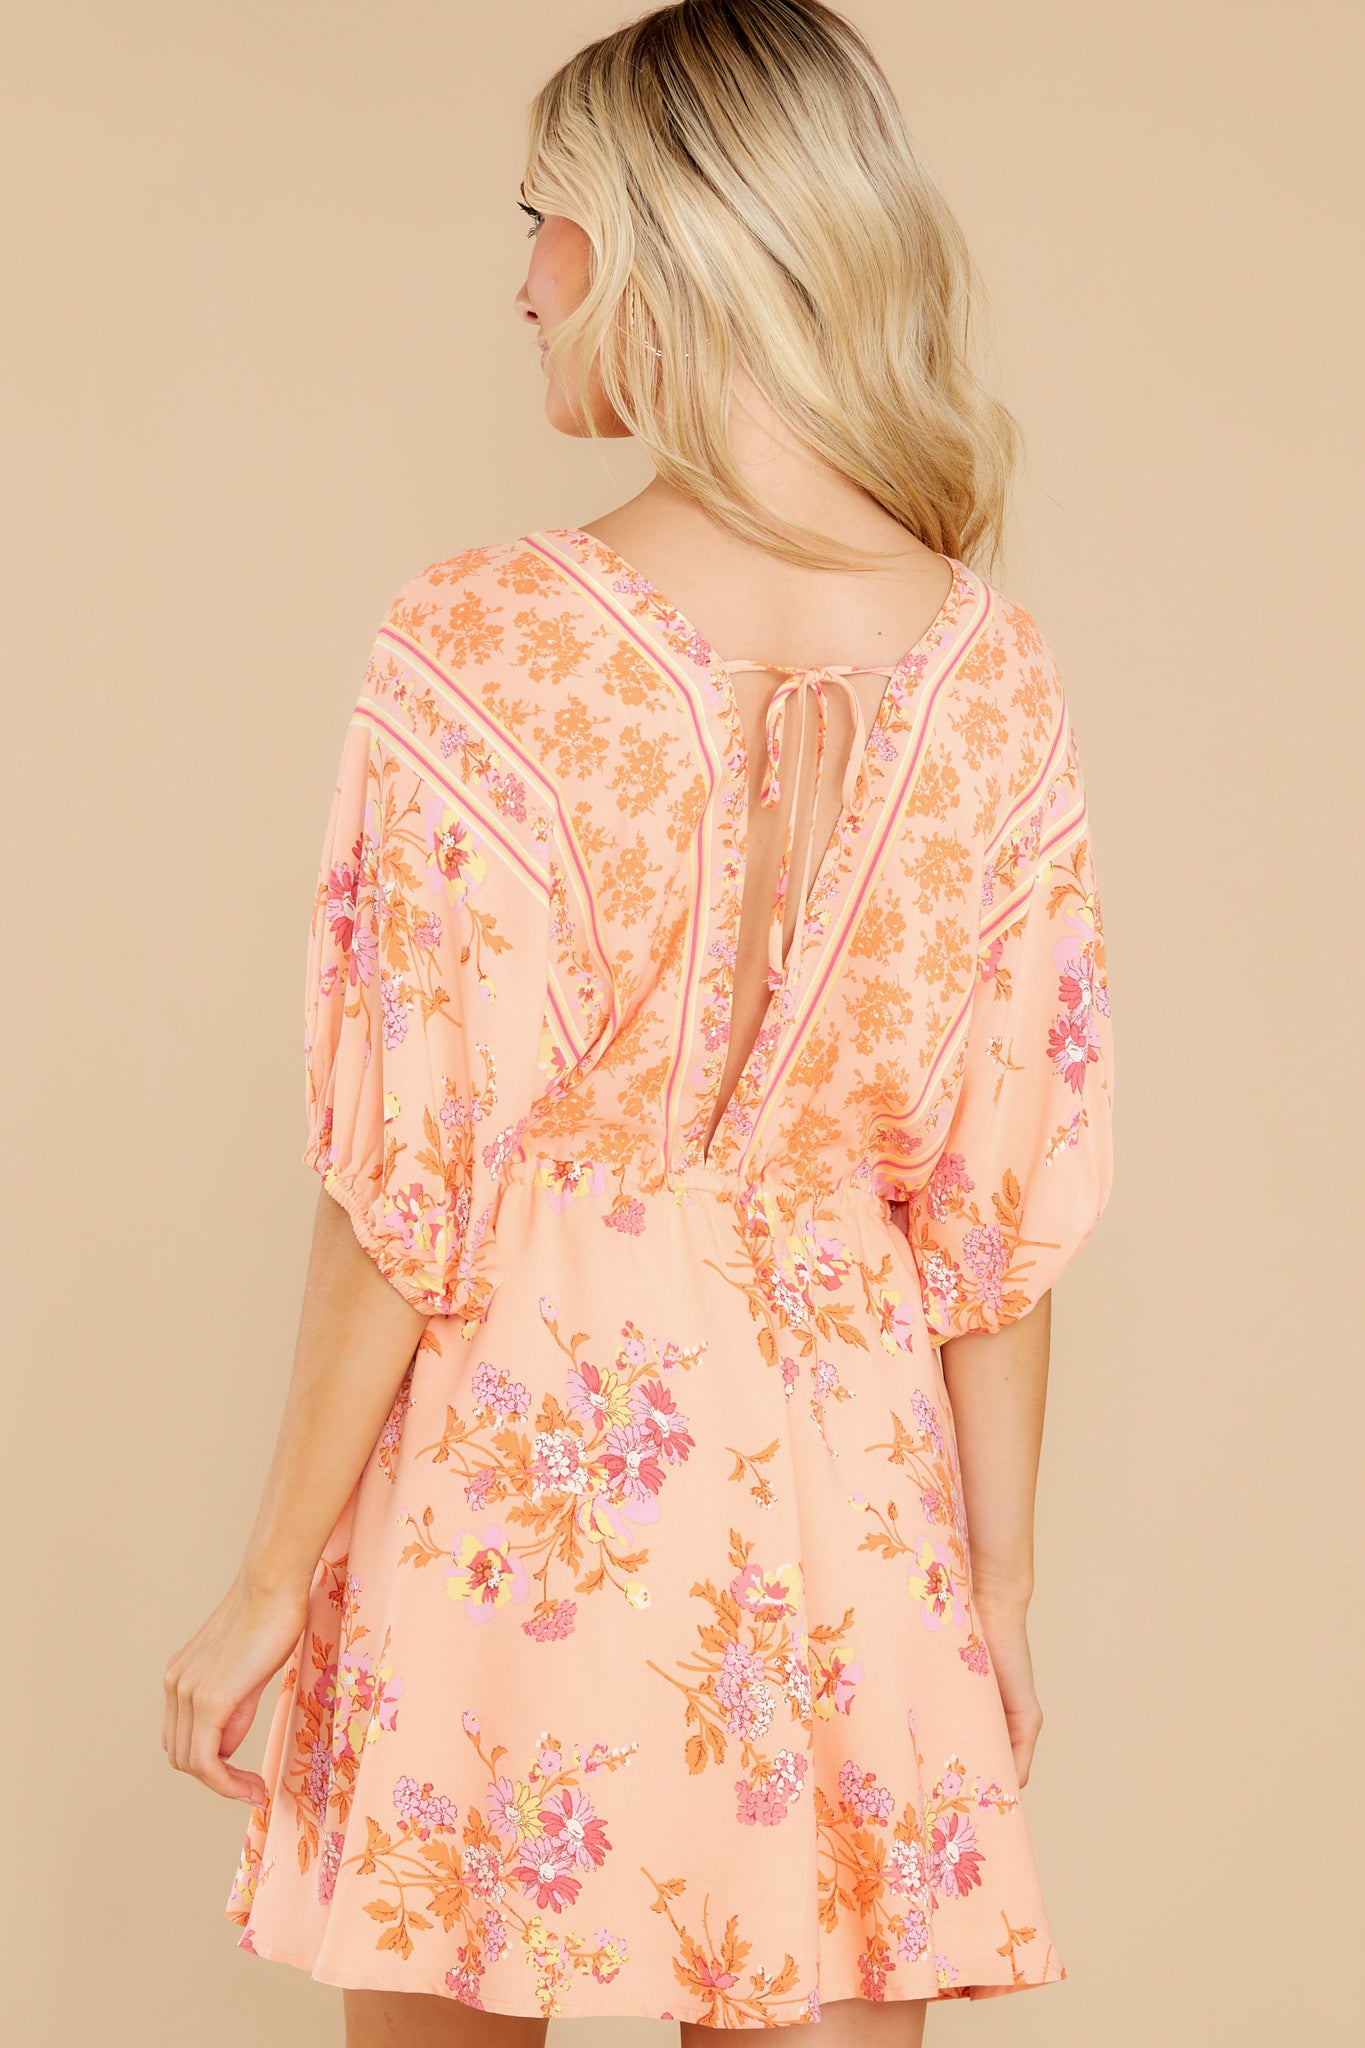 8 Simply Carefree Peach Multi Floral Print Dress at reddress.com